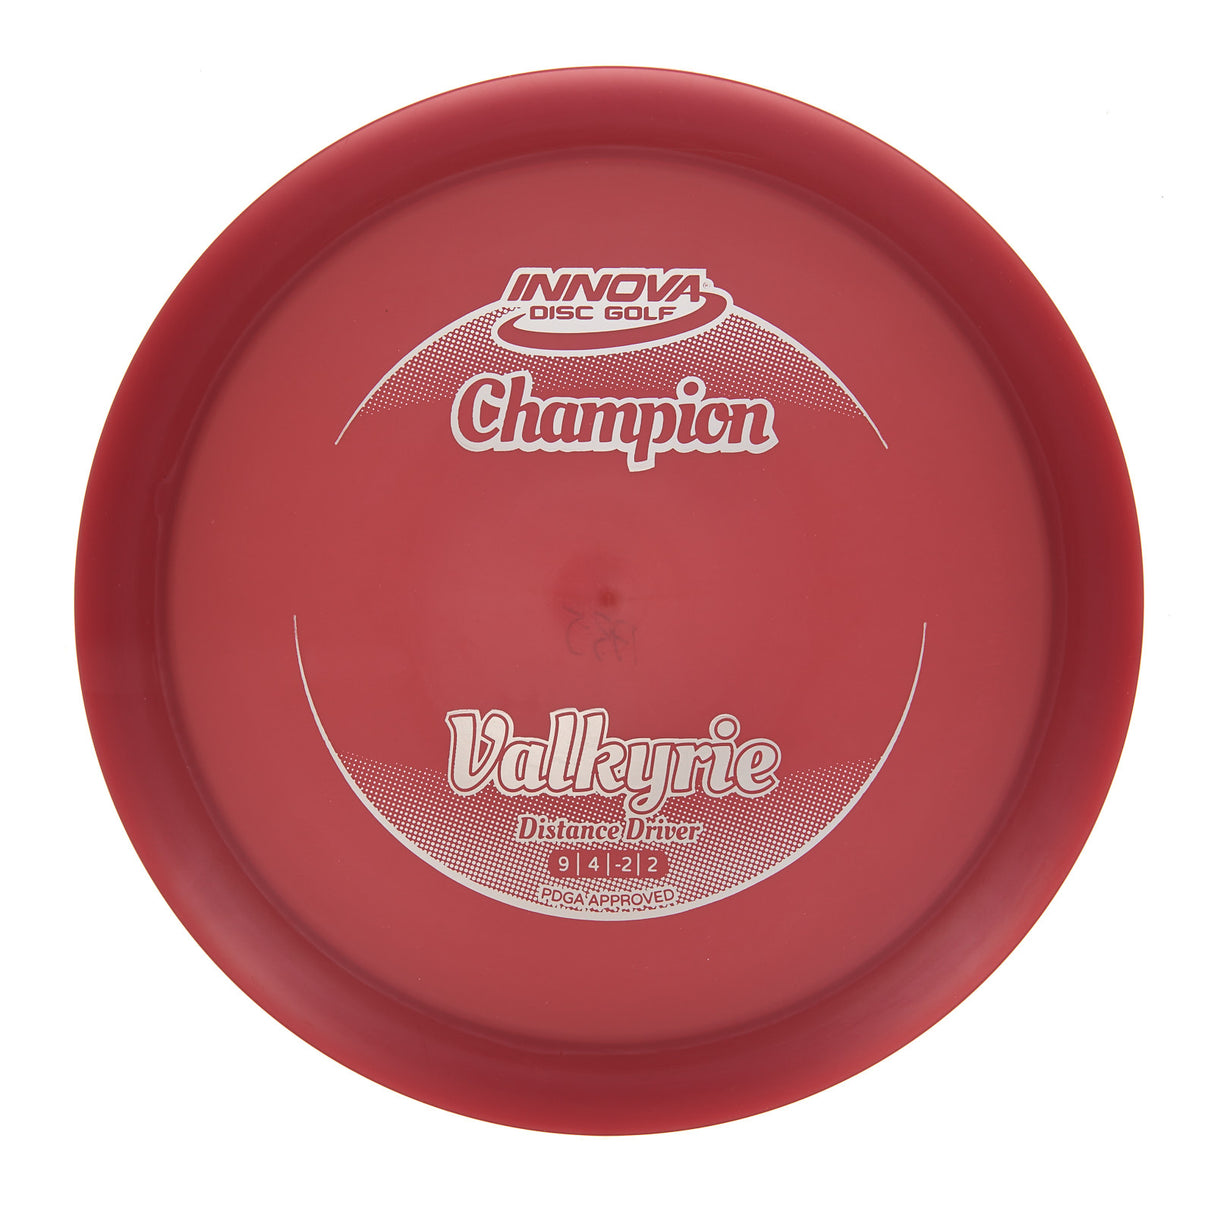 Innova Valkyrie - Champion 177g | Style 0001